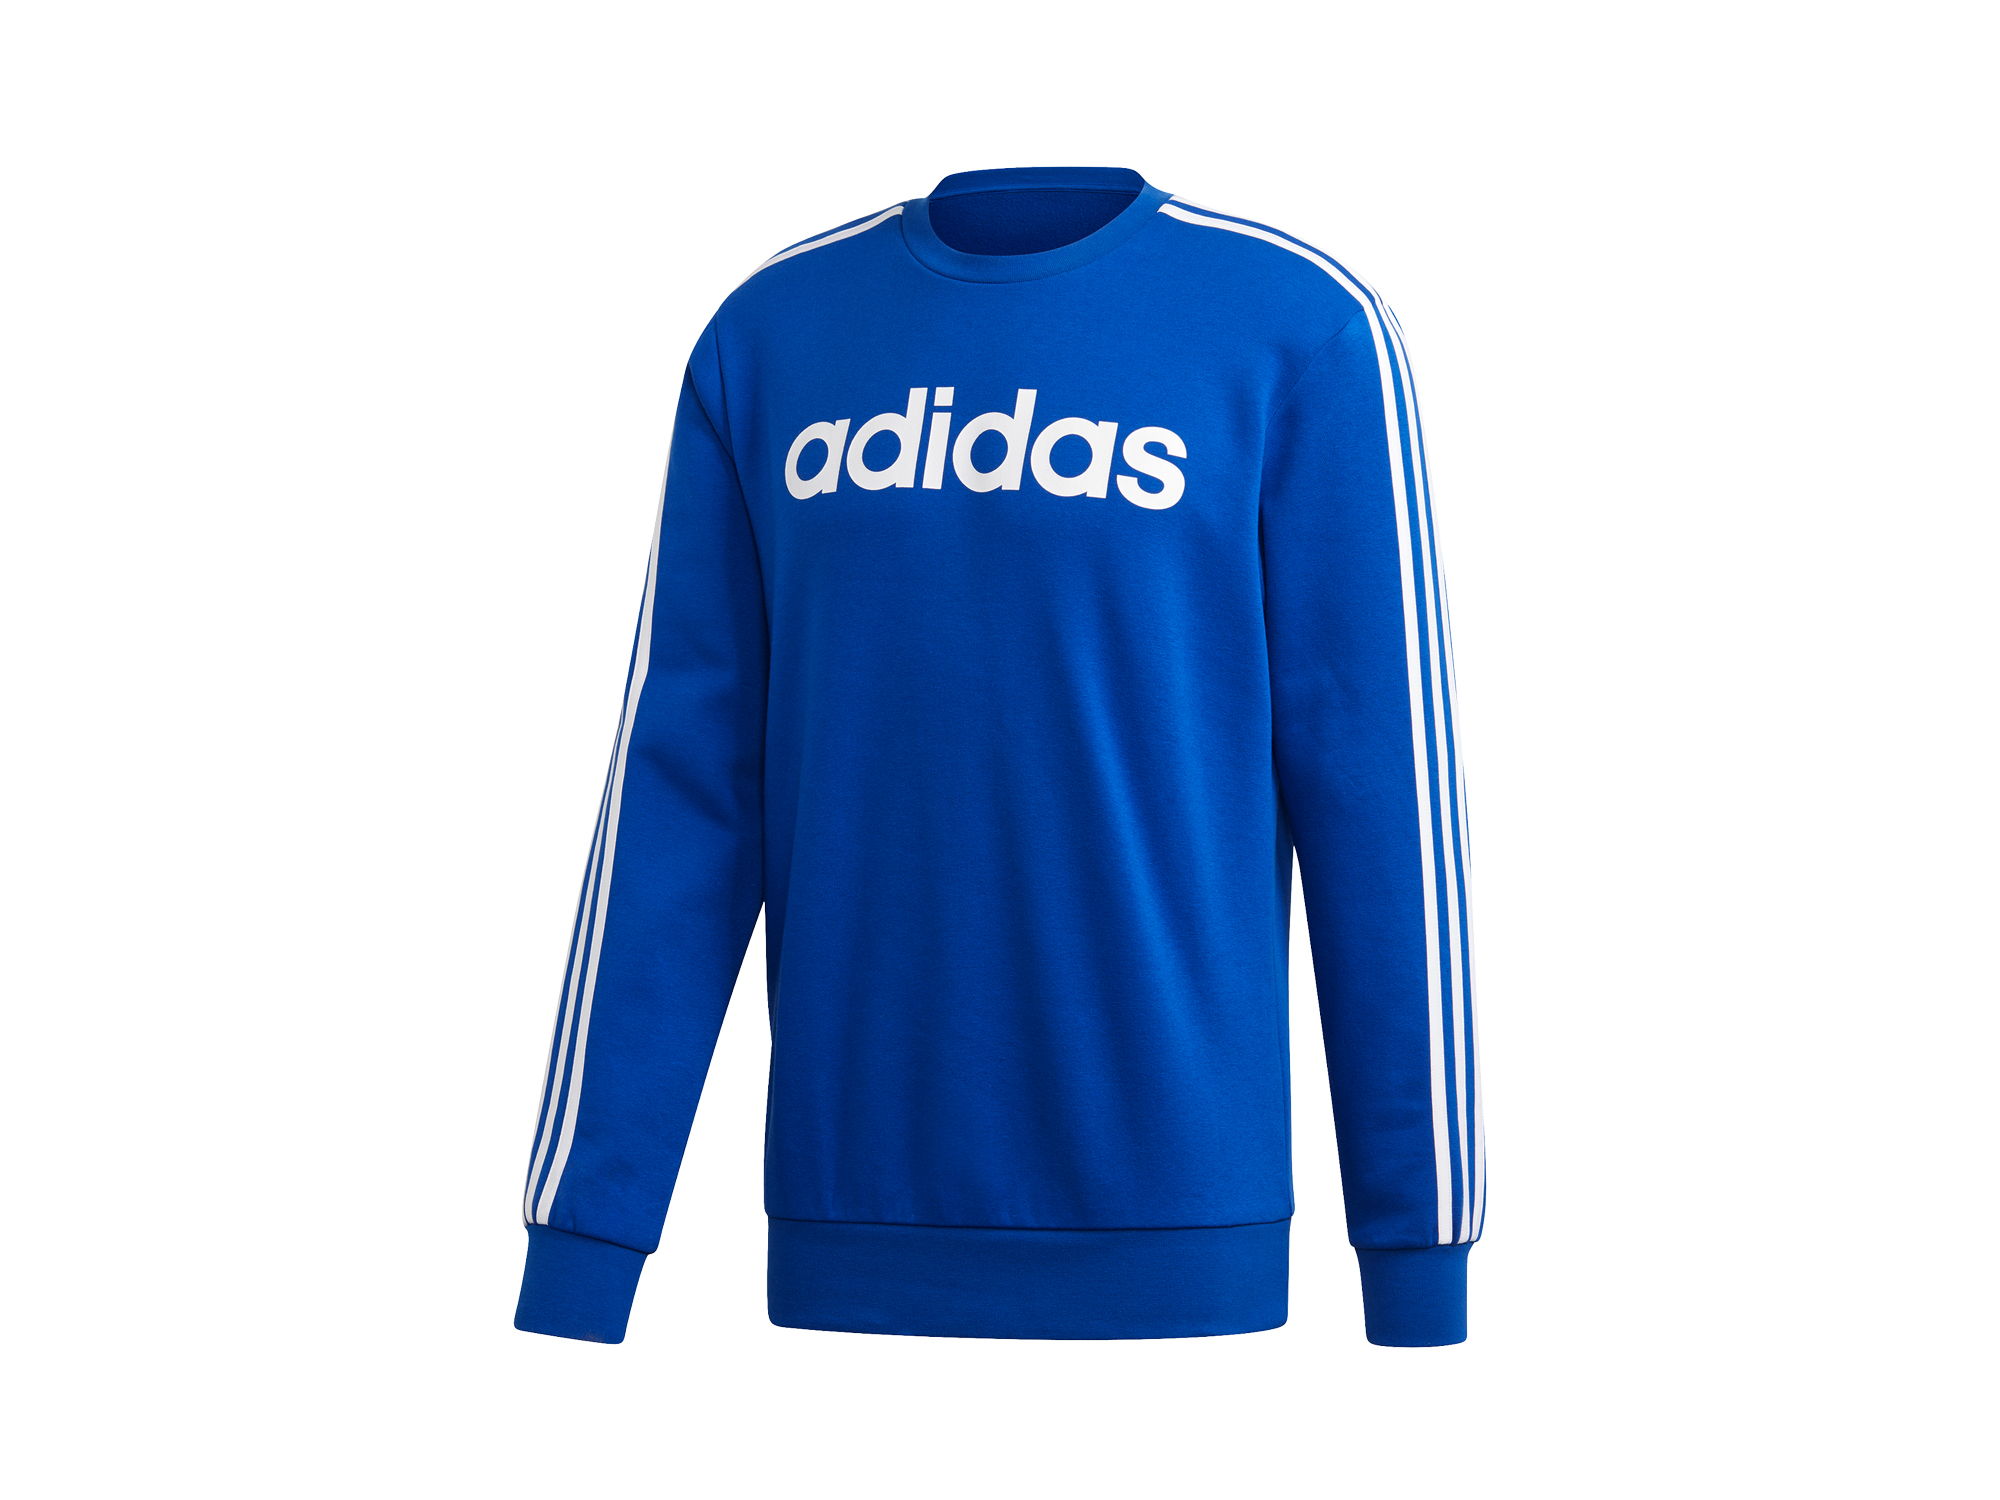 Adidas Essentials 3-Stripes Sweatshirt